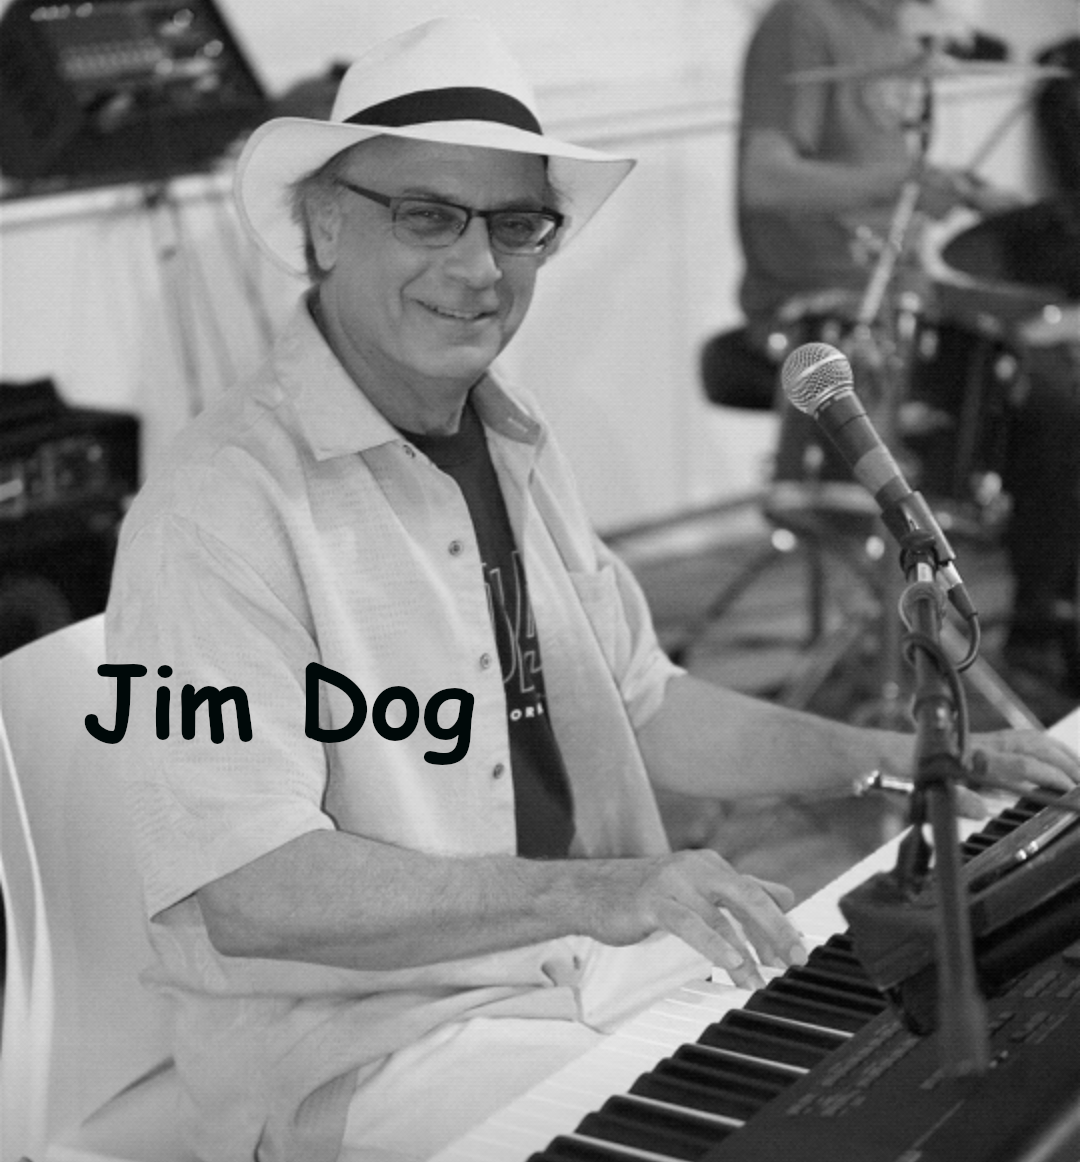 Jim Dog